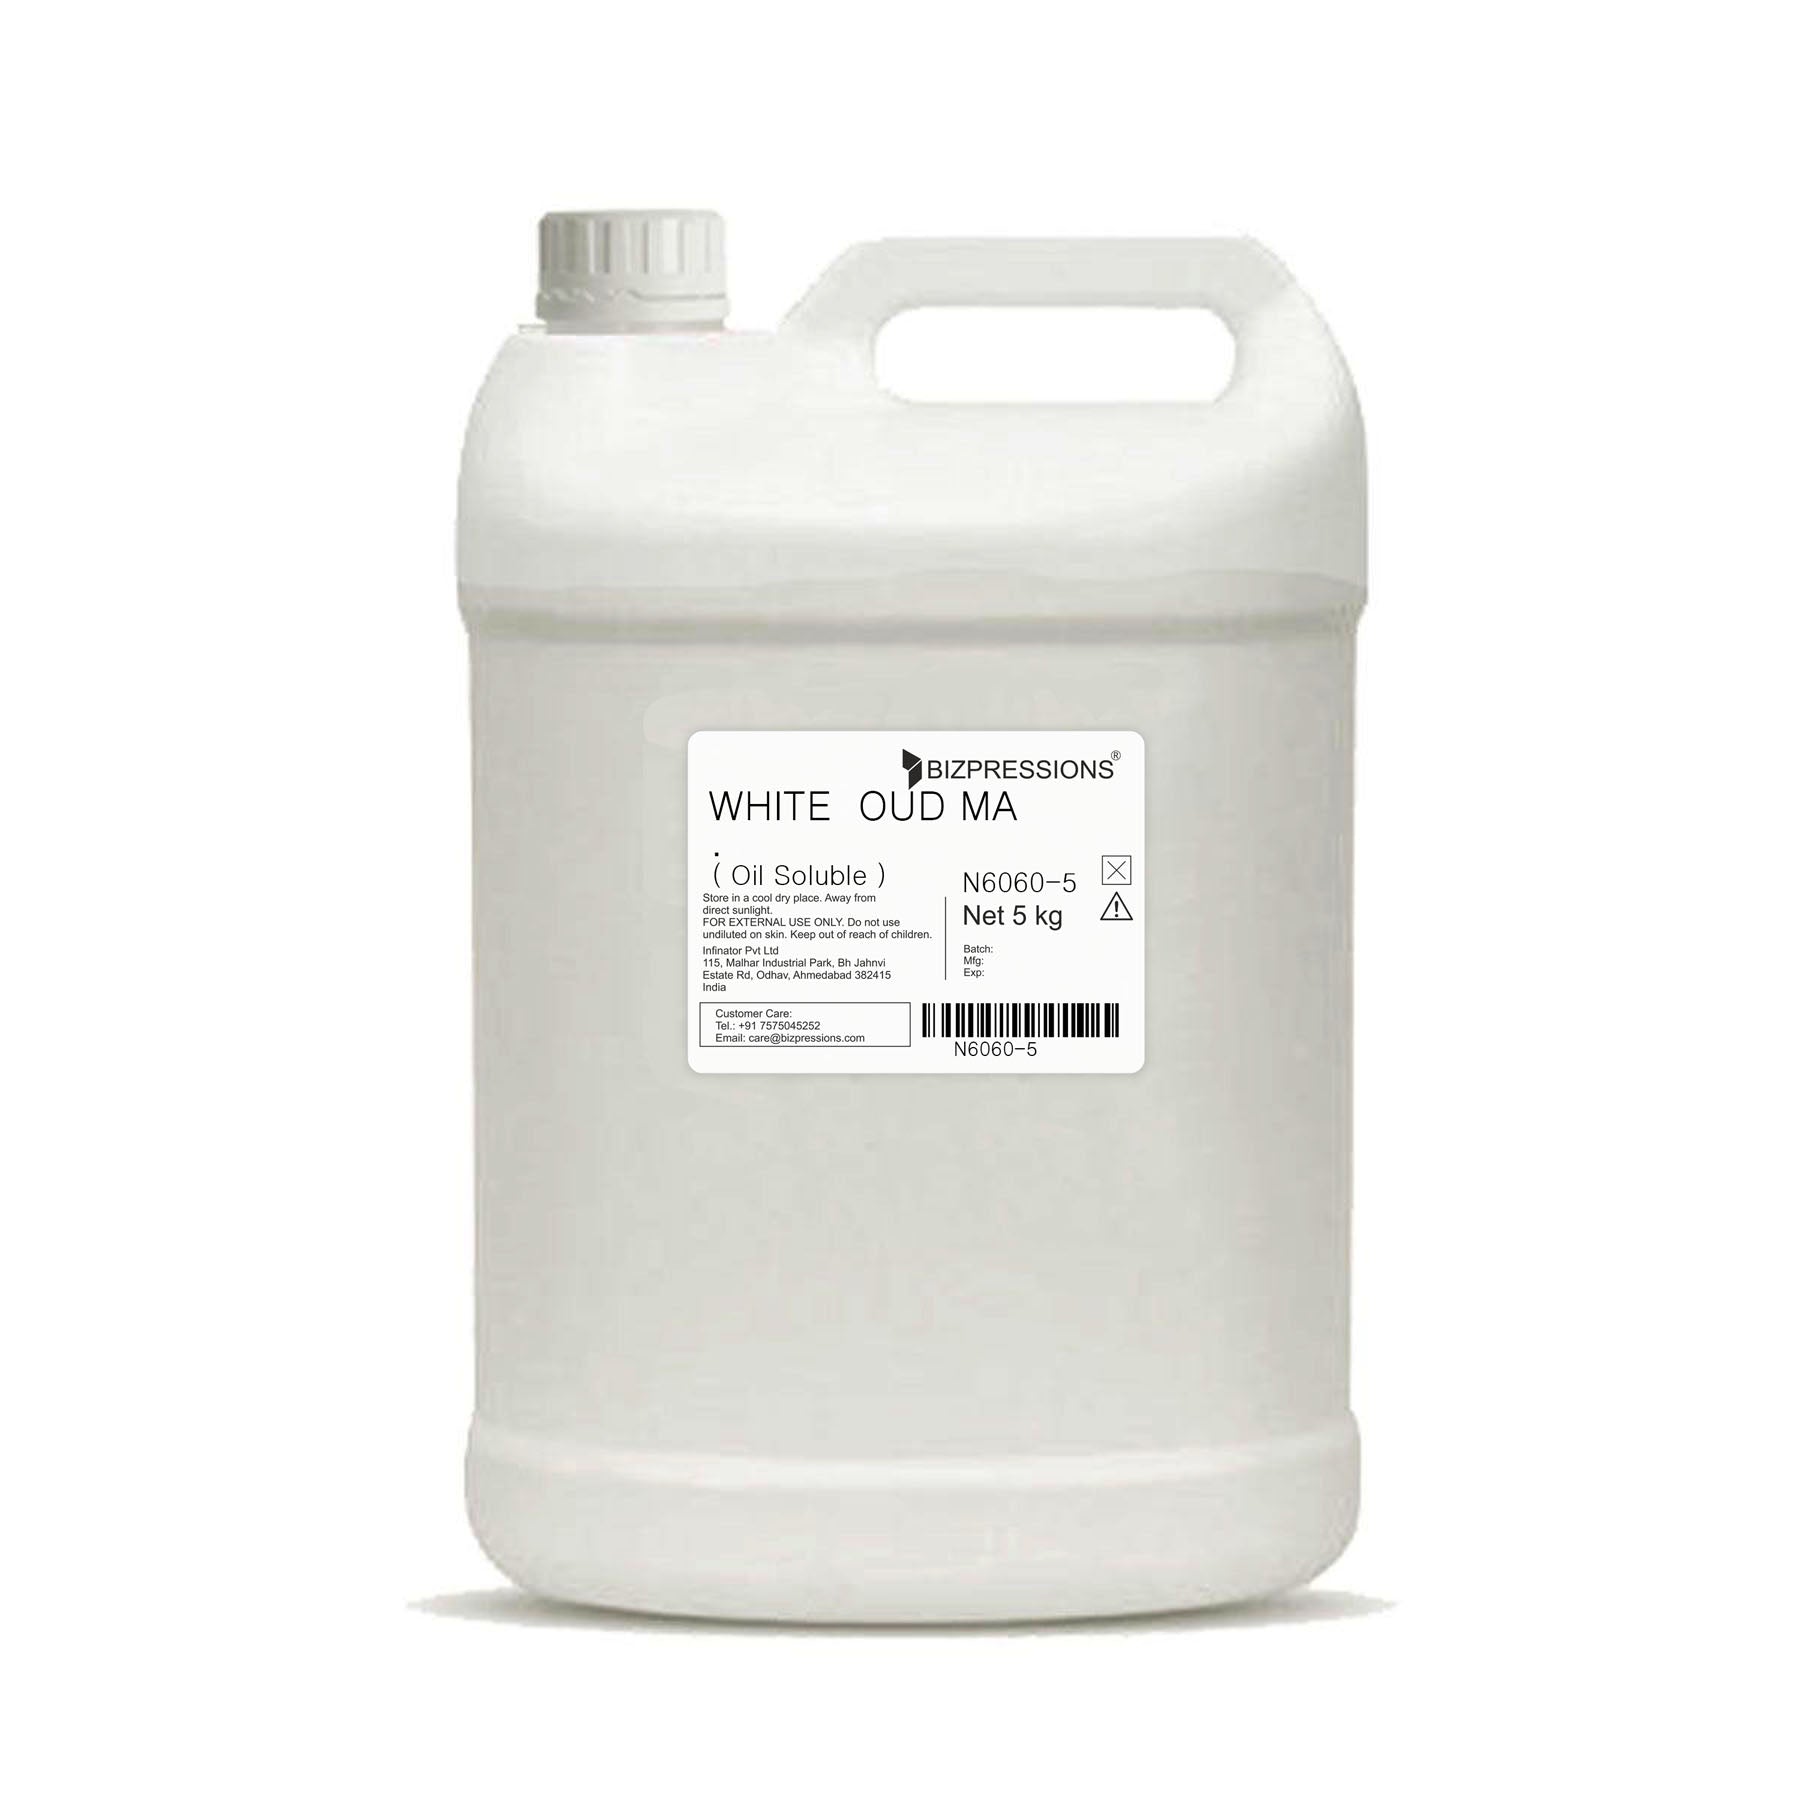 WHITE OUD MA - Fragrance ( Oil Soluble ) - 5 kg